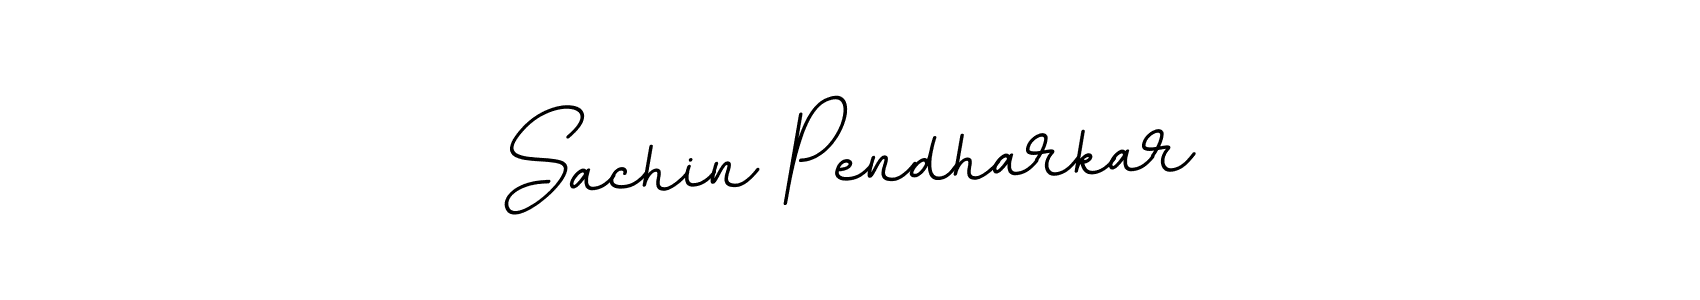 How to Draw Sachin Pendharkar signature style? BallpointsItalic-DORy9 is a latest design signature styles for name Sachin Pendharkar. Sachin Pendharkar signature style 11 images and pictures png